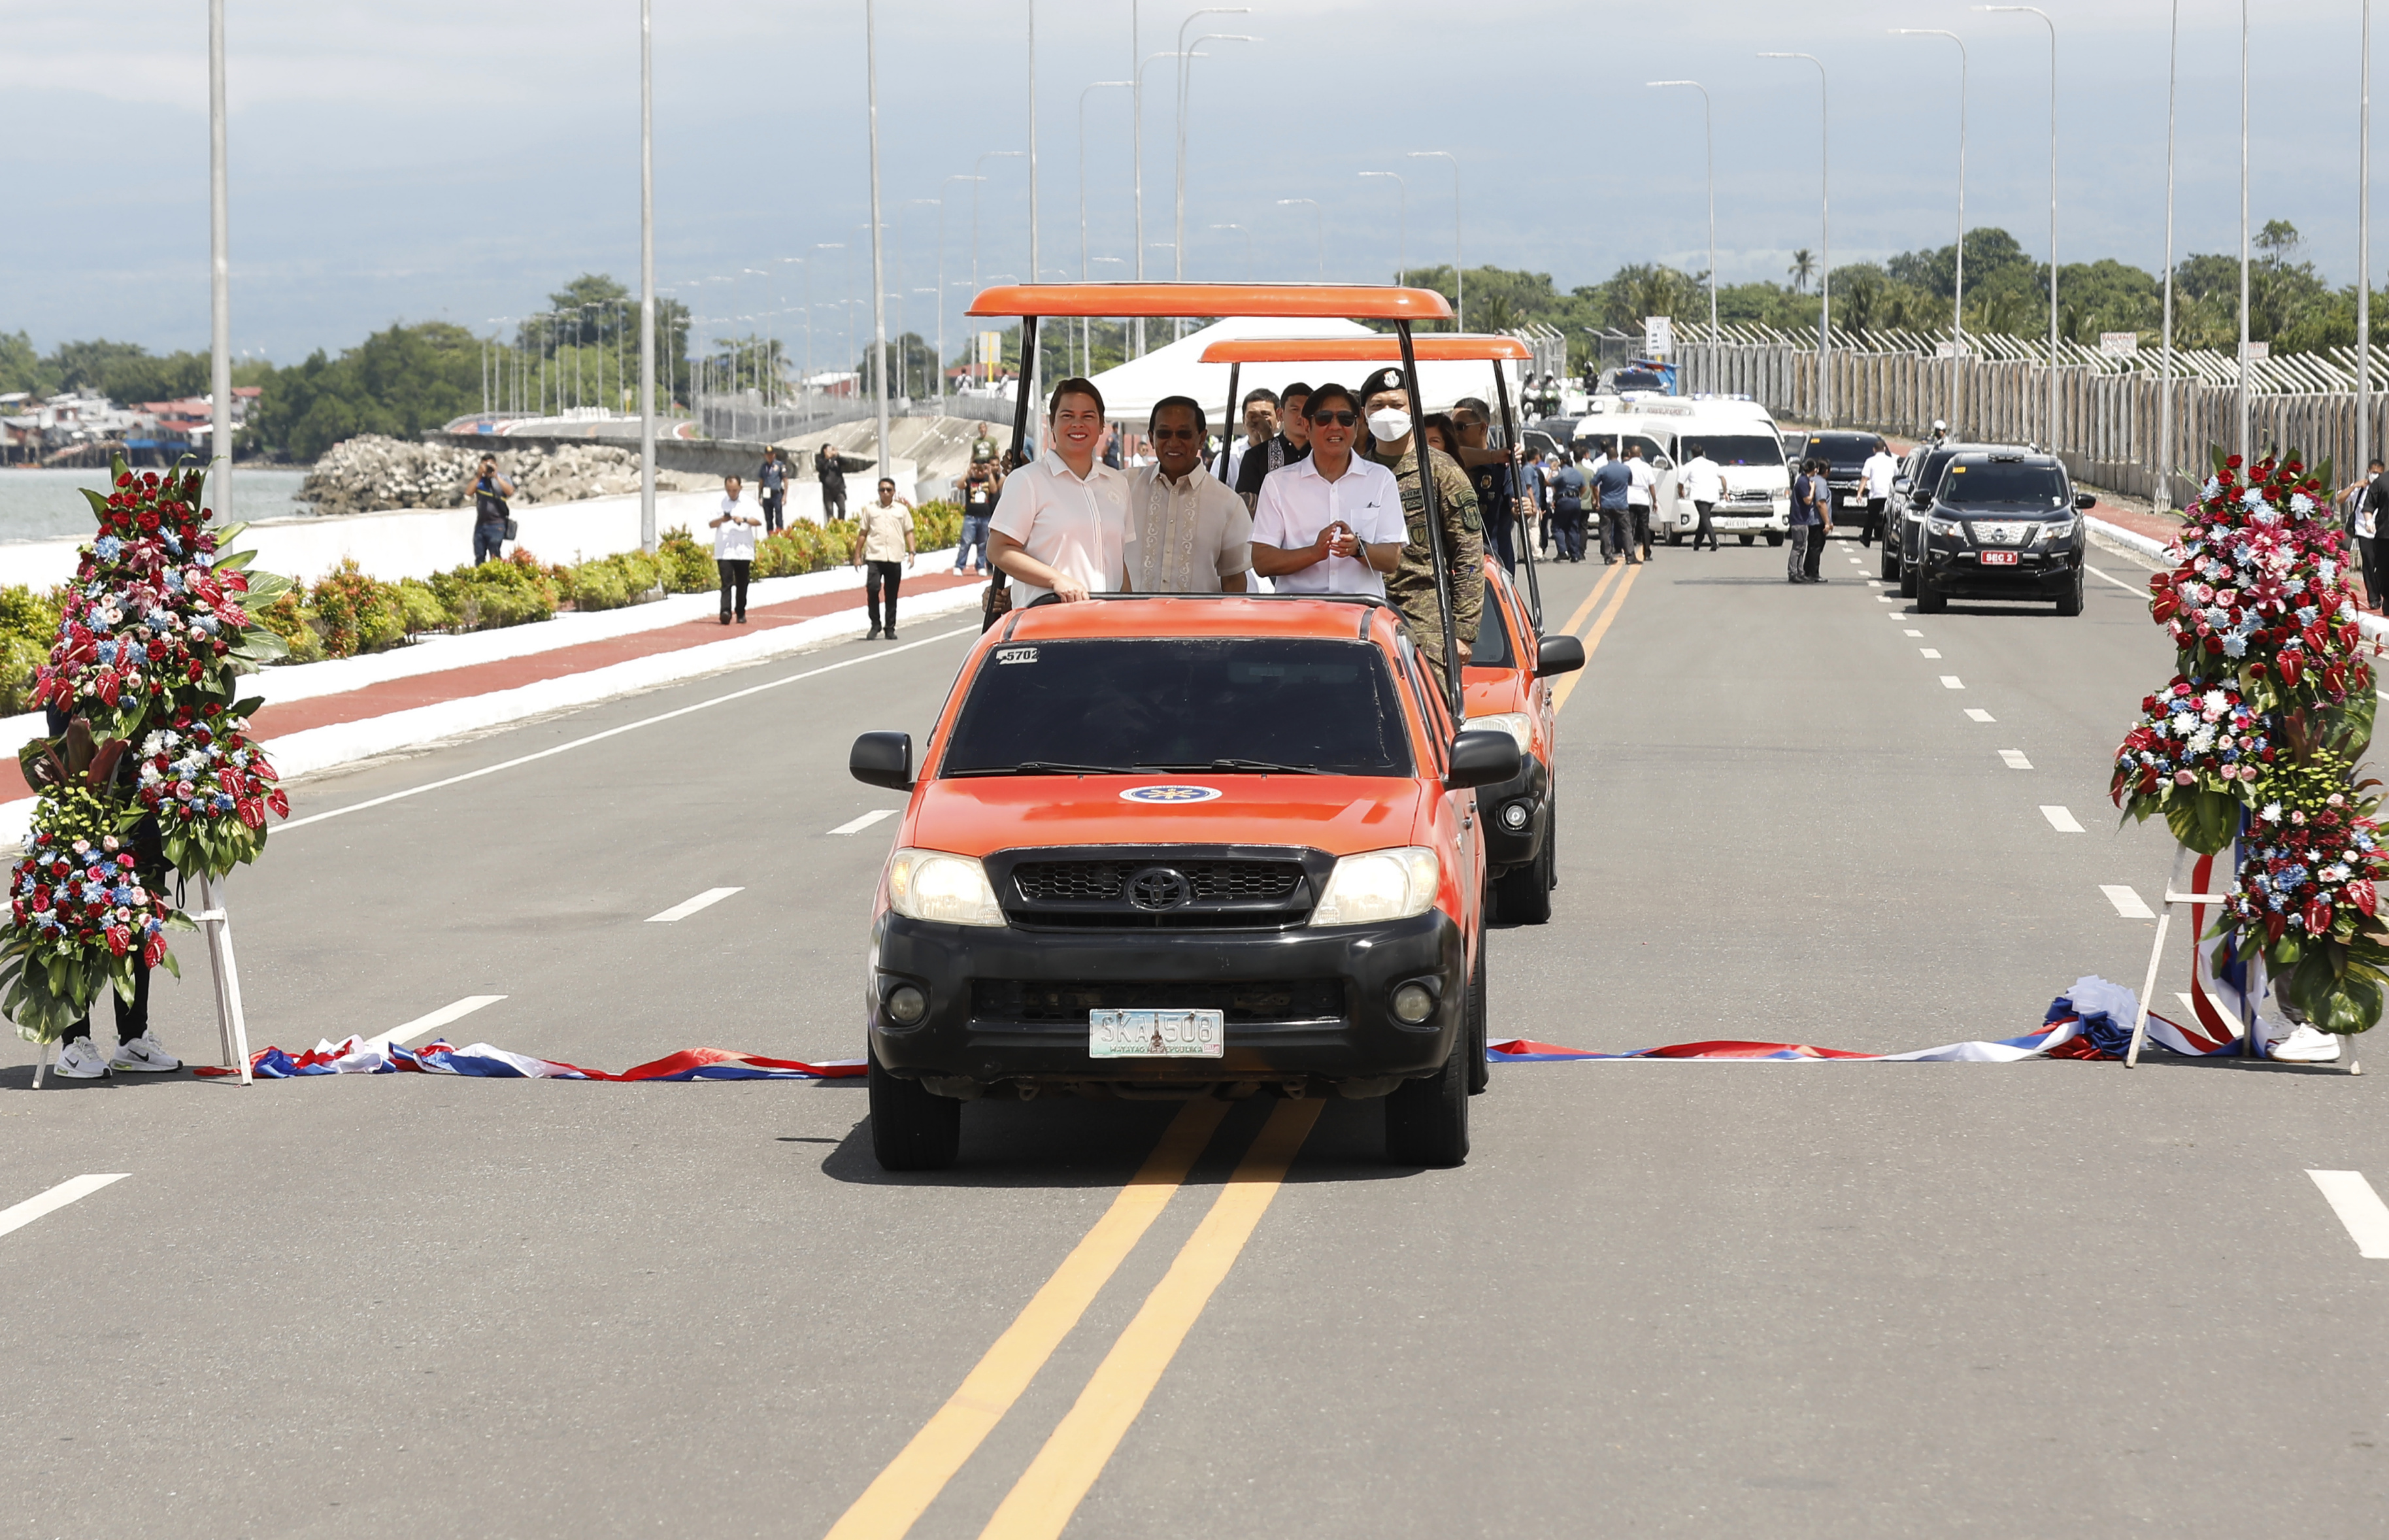 Inauguration of the Davao City Coastal Bypass Road Project (Segment A)